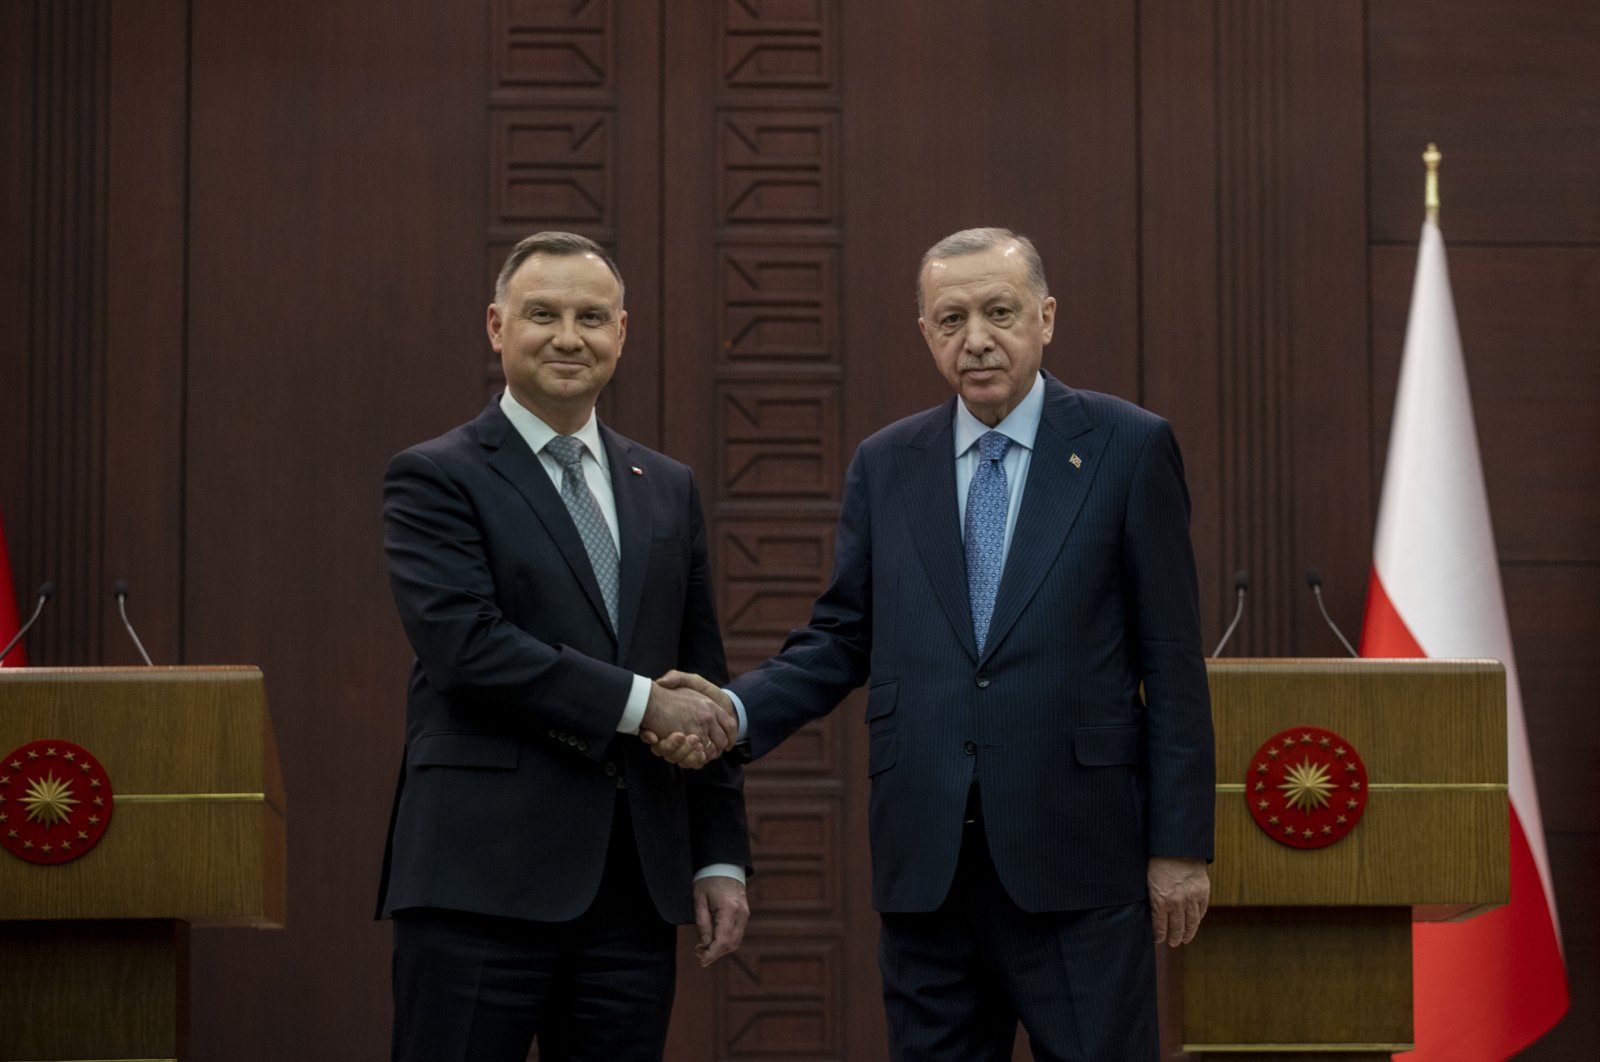 Duda dari Polandia berterima kasih kepada Erdogan atas dukungan Turki terhadap para migran